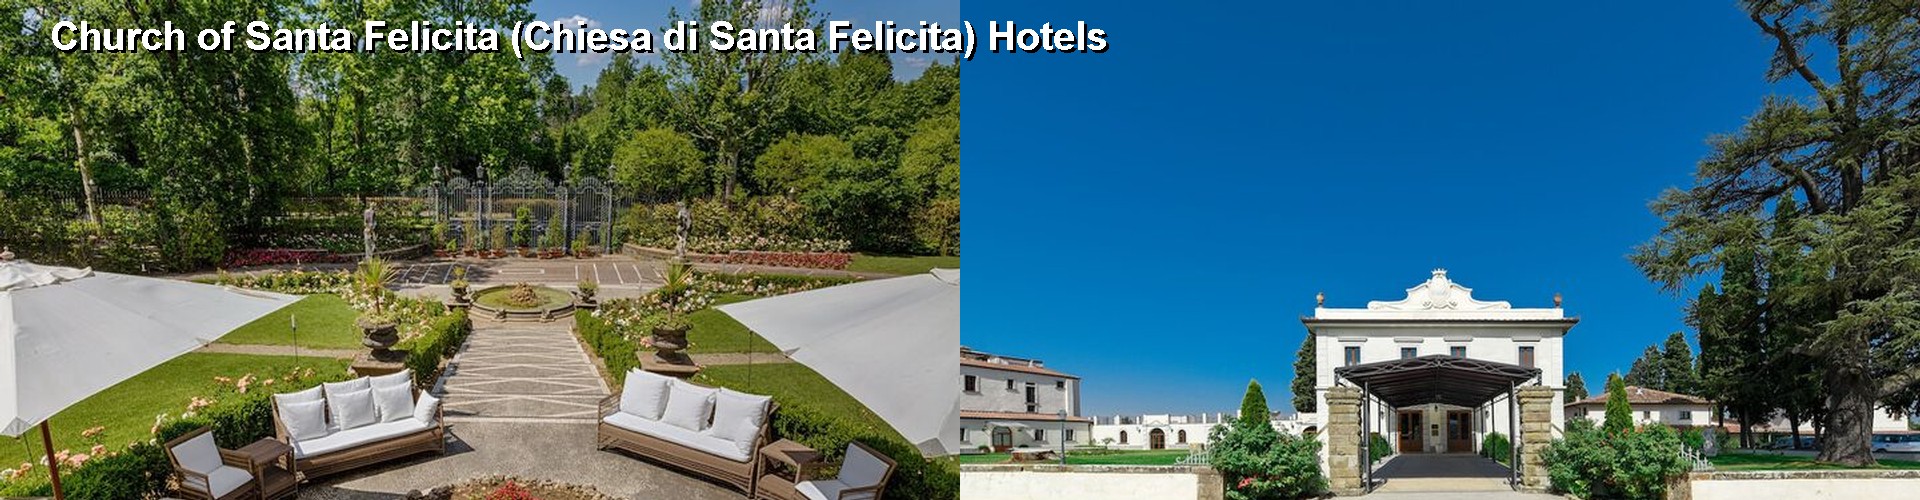 5 Best Hotels near Church of Santa Felicita (Chiesa di Santa Felicita)